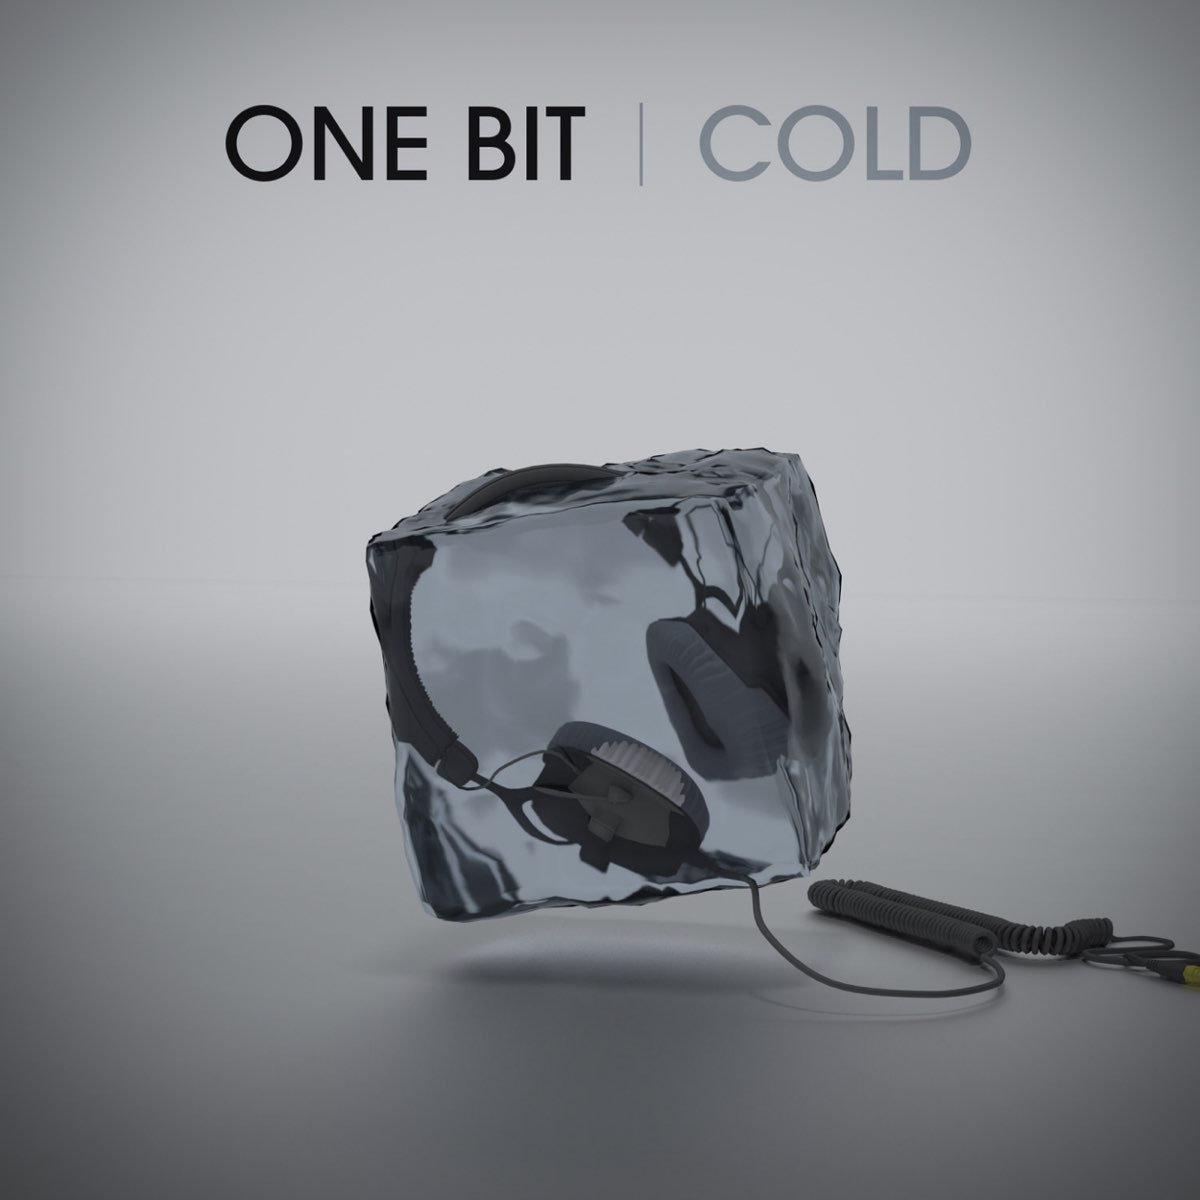 One bit. Cold Loner Tape. Cold Culture - Cold (Single). Картинка холод 1bit. Музыка cold